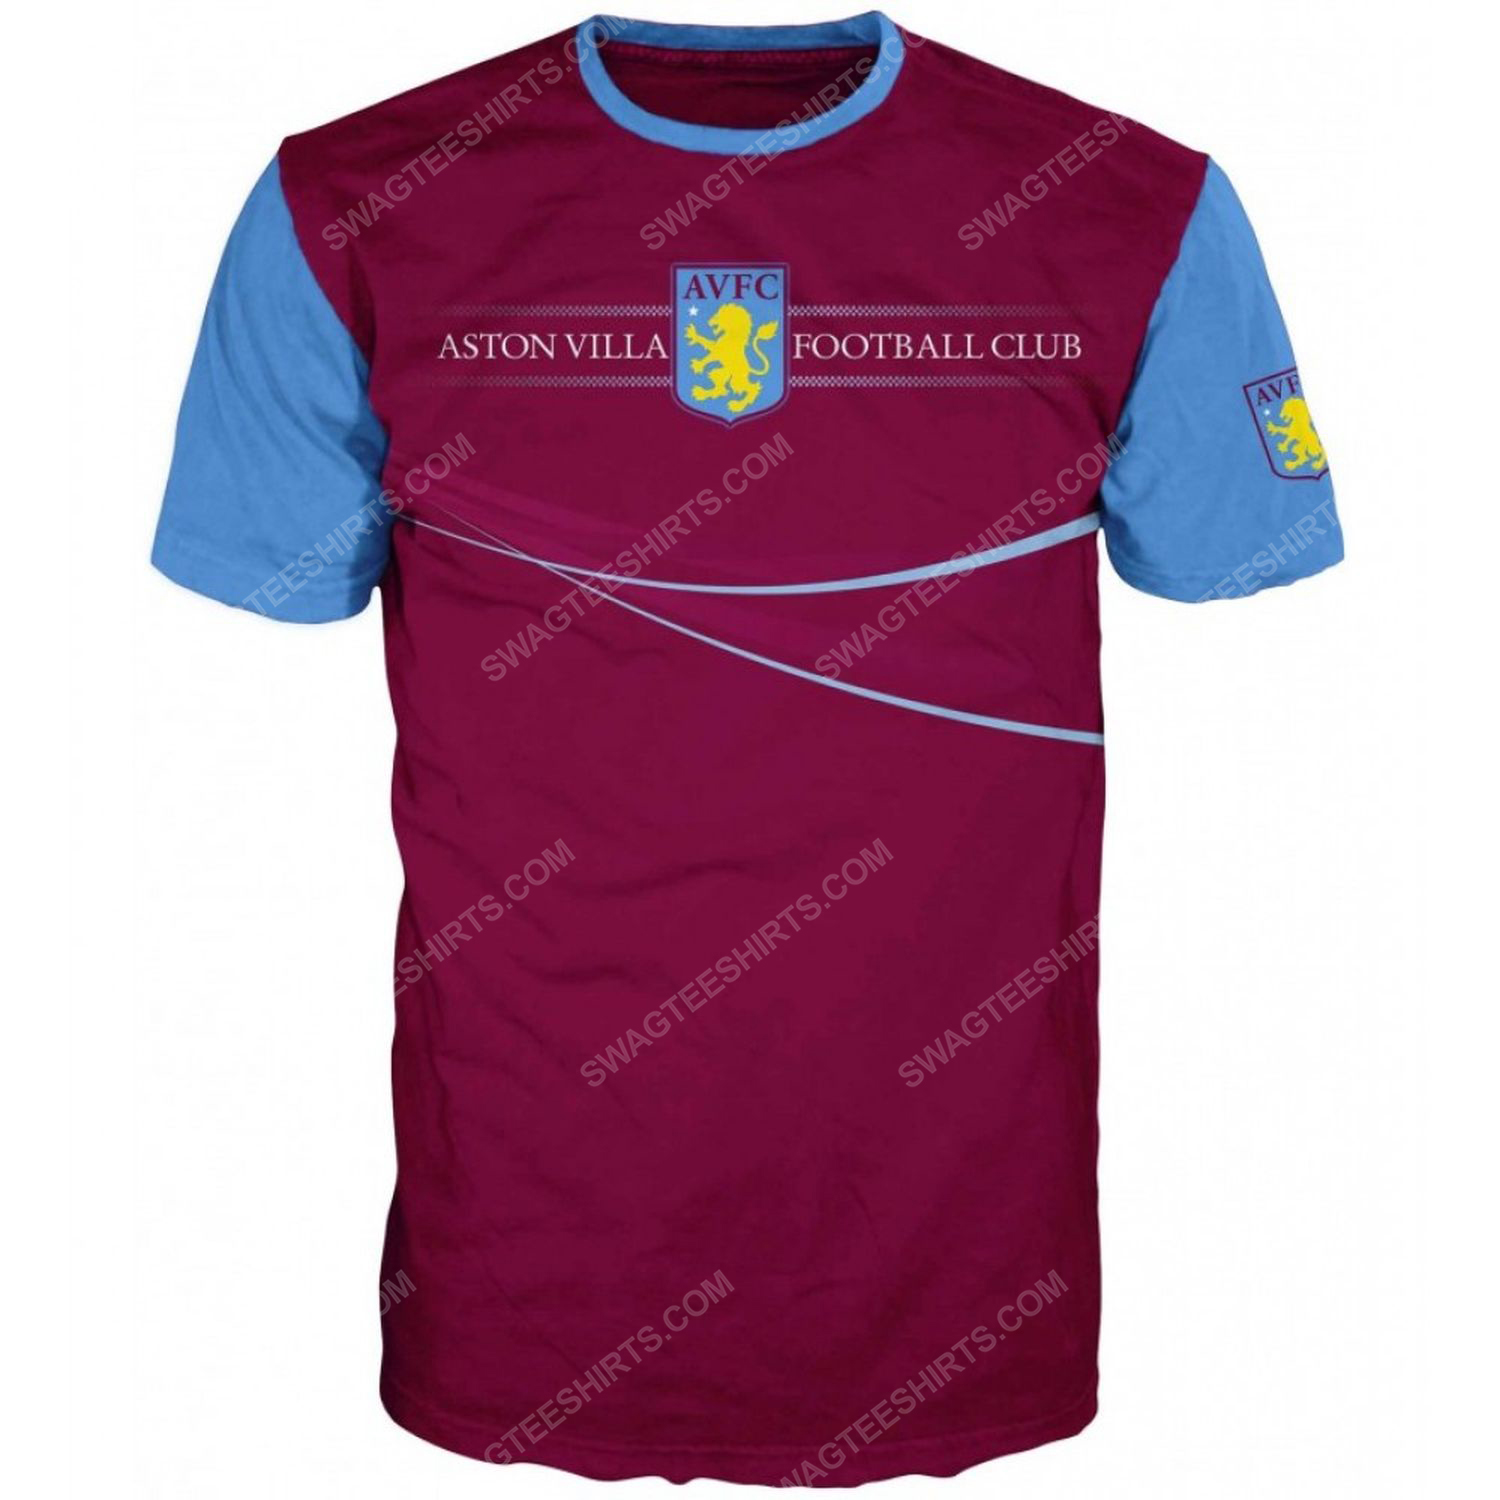 Aston villa football club all over print shirt - front